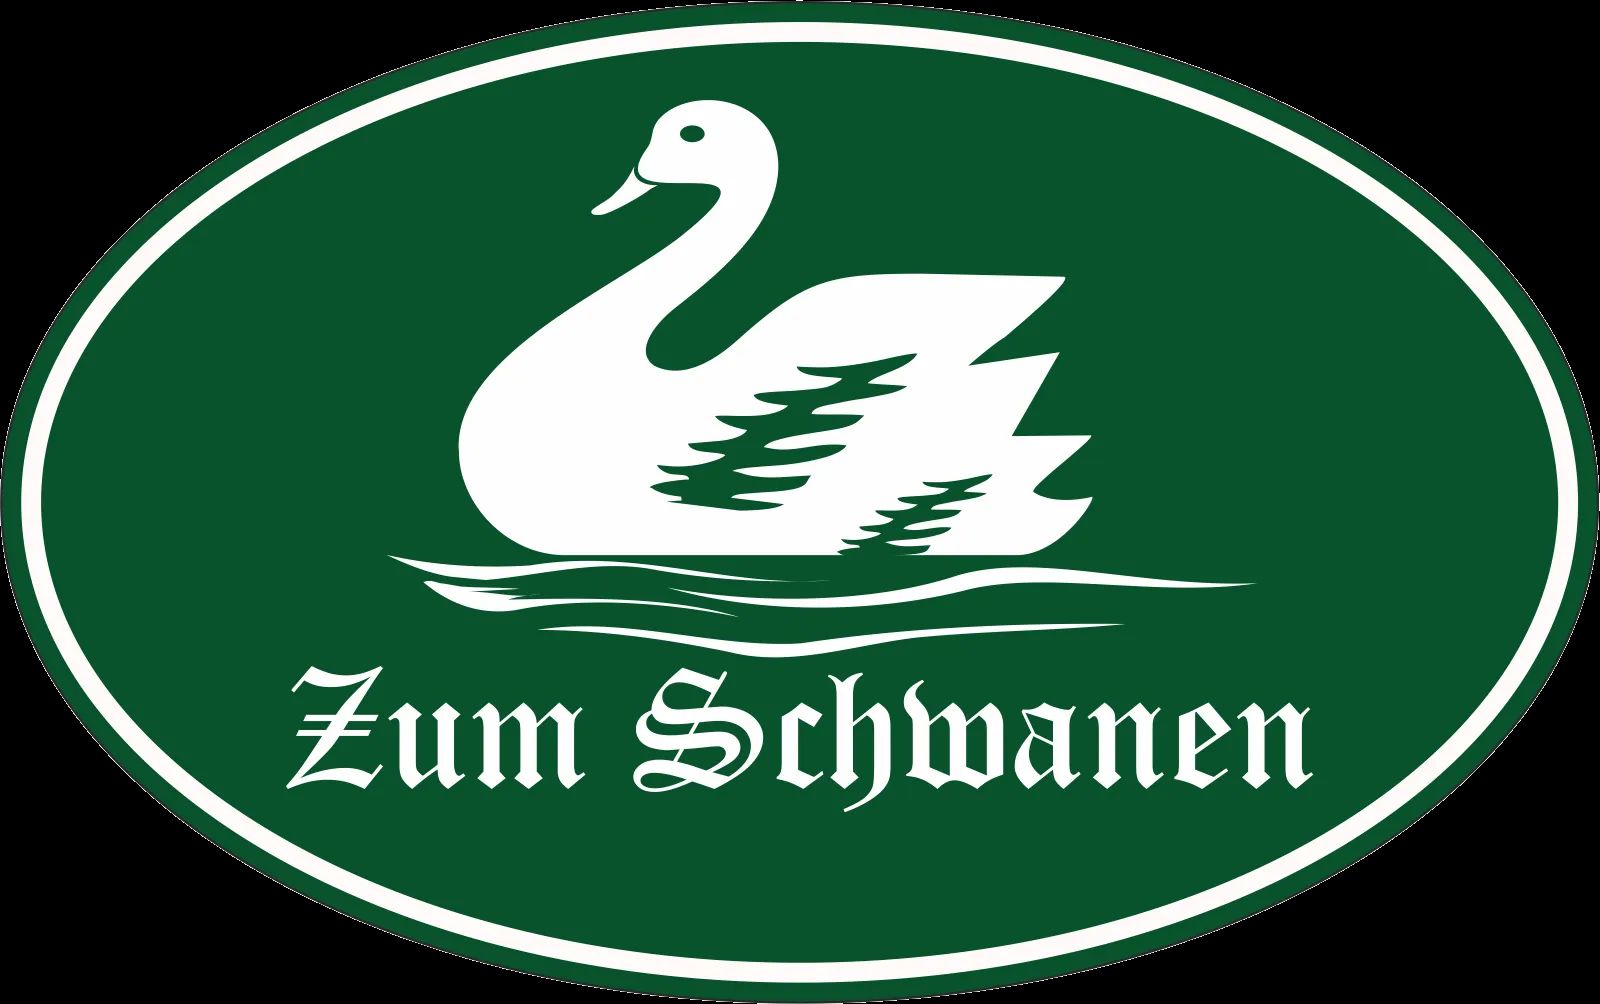 Zum Schwanen: Logo